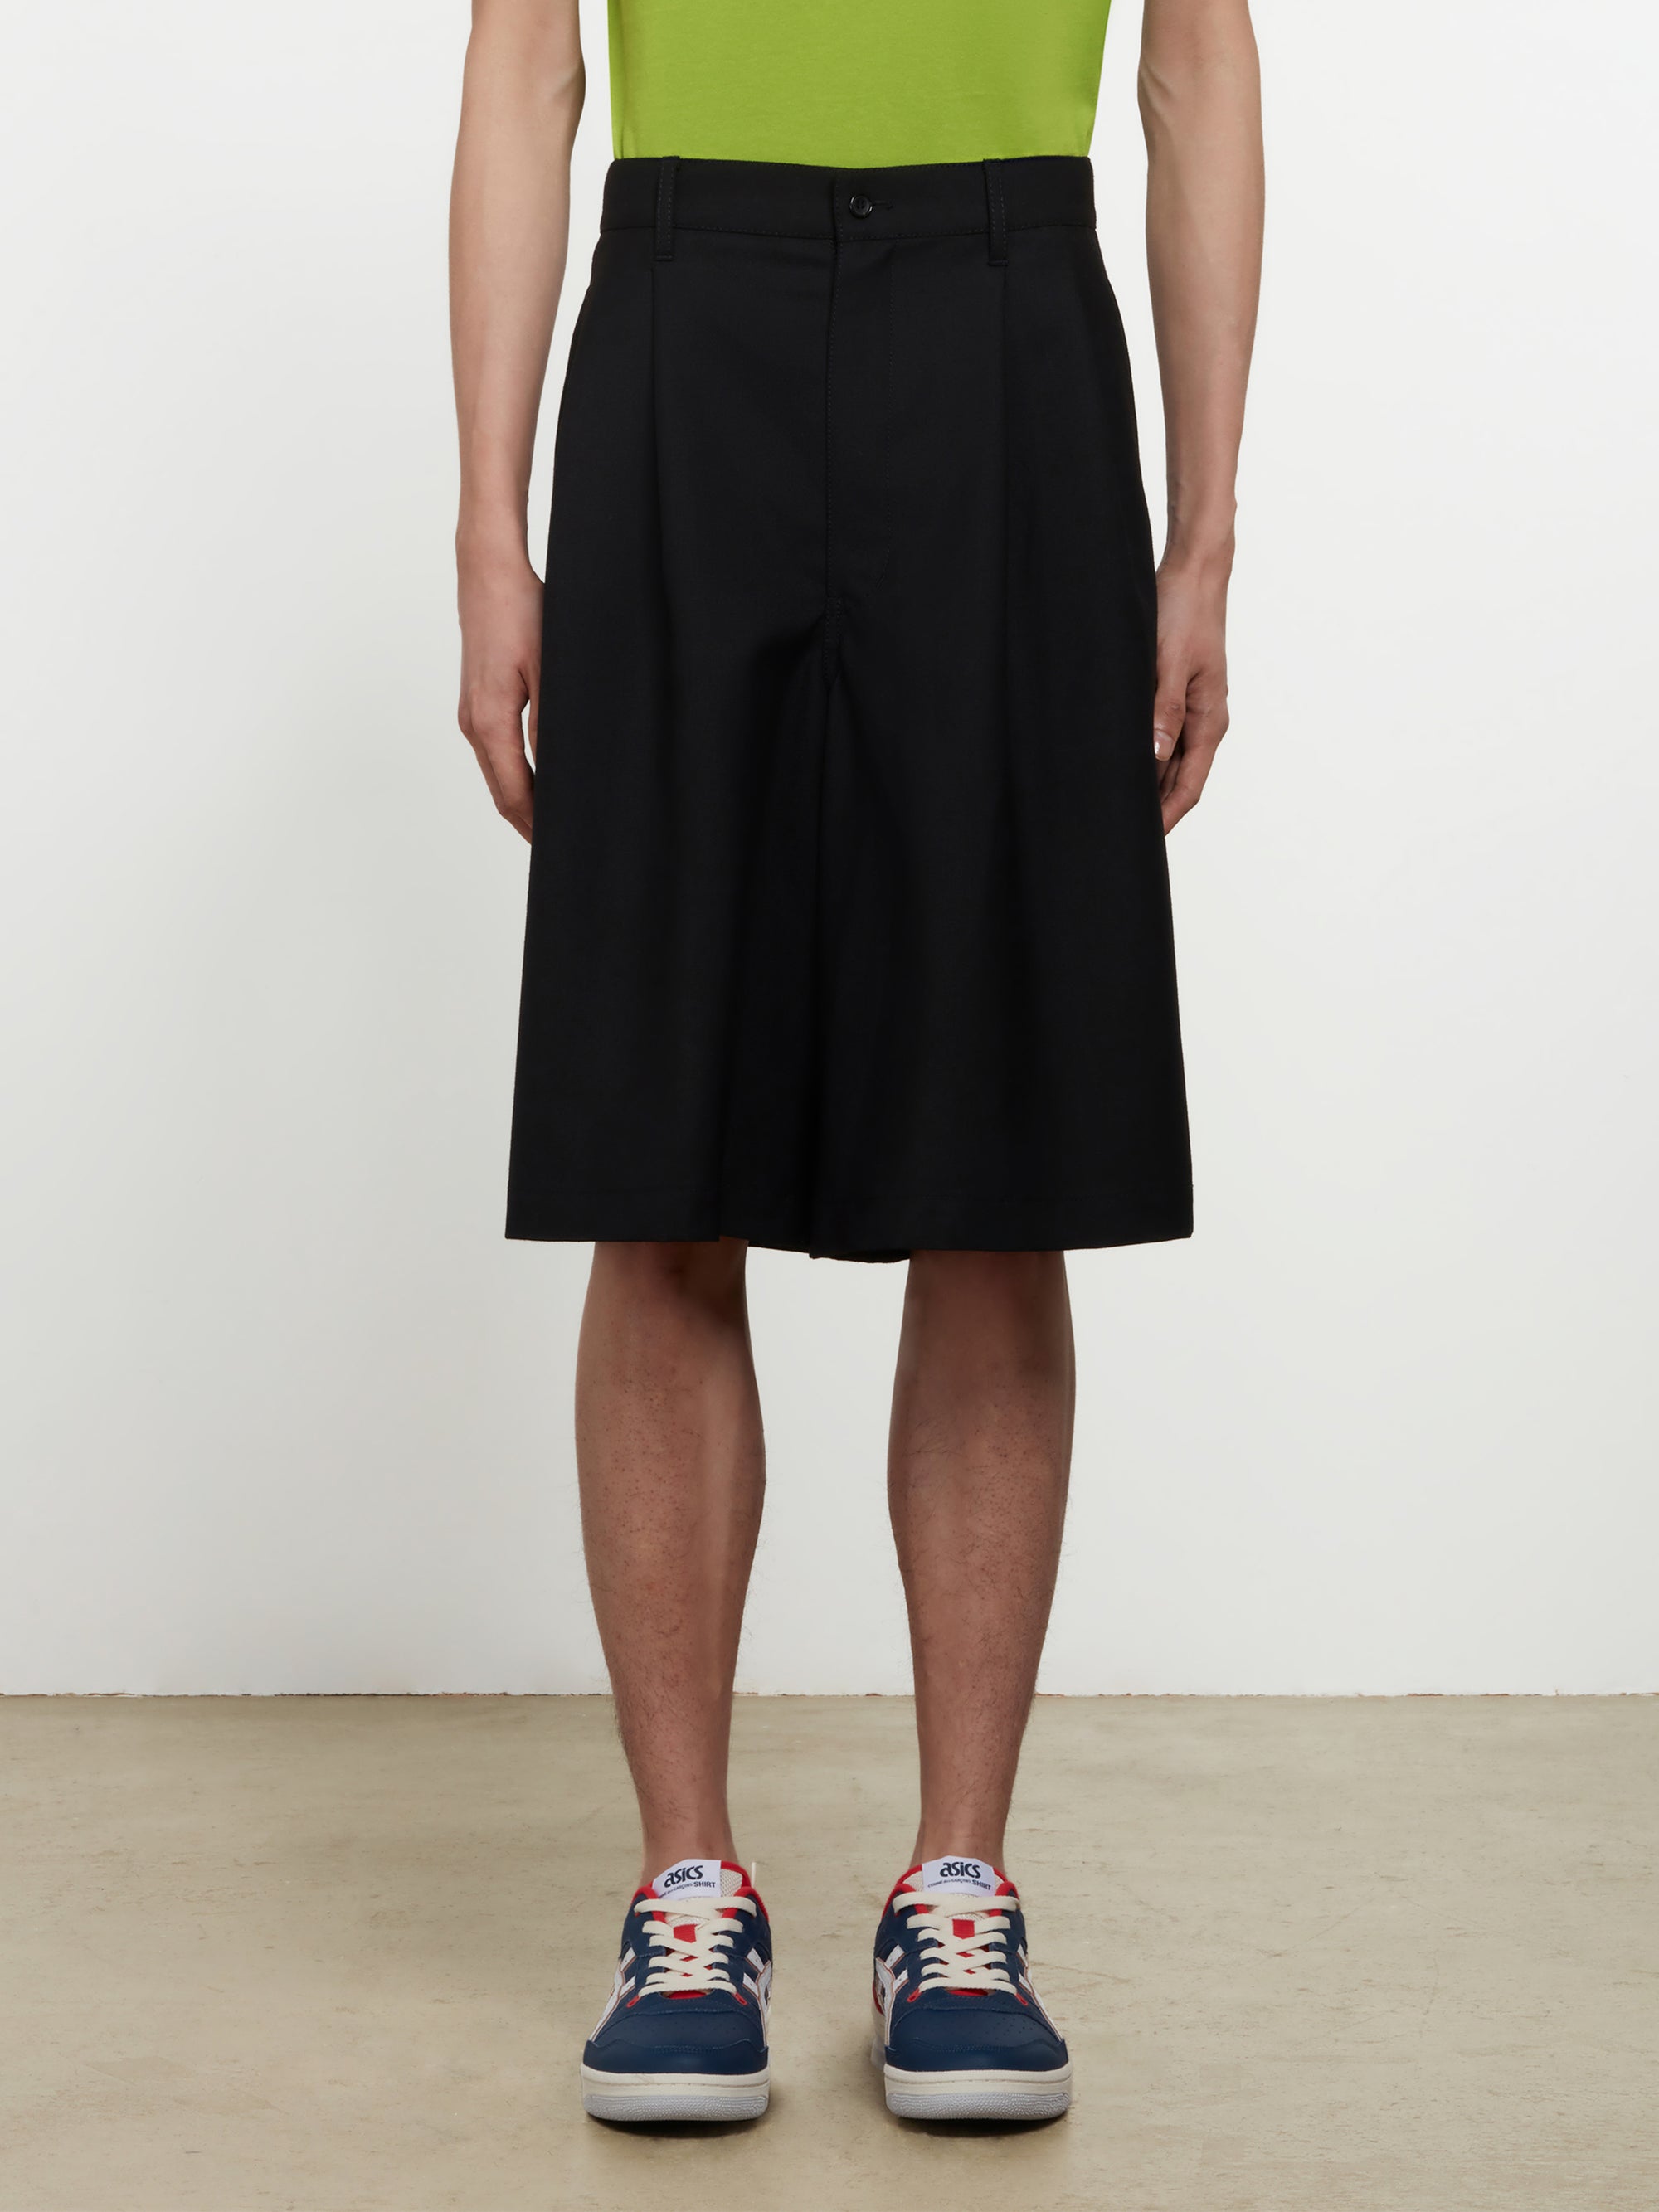 CDG Shirt - Men’s Wool Broadcloth Shorts - (Black) view 1